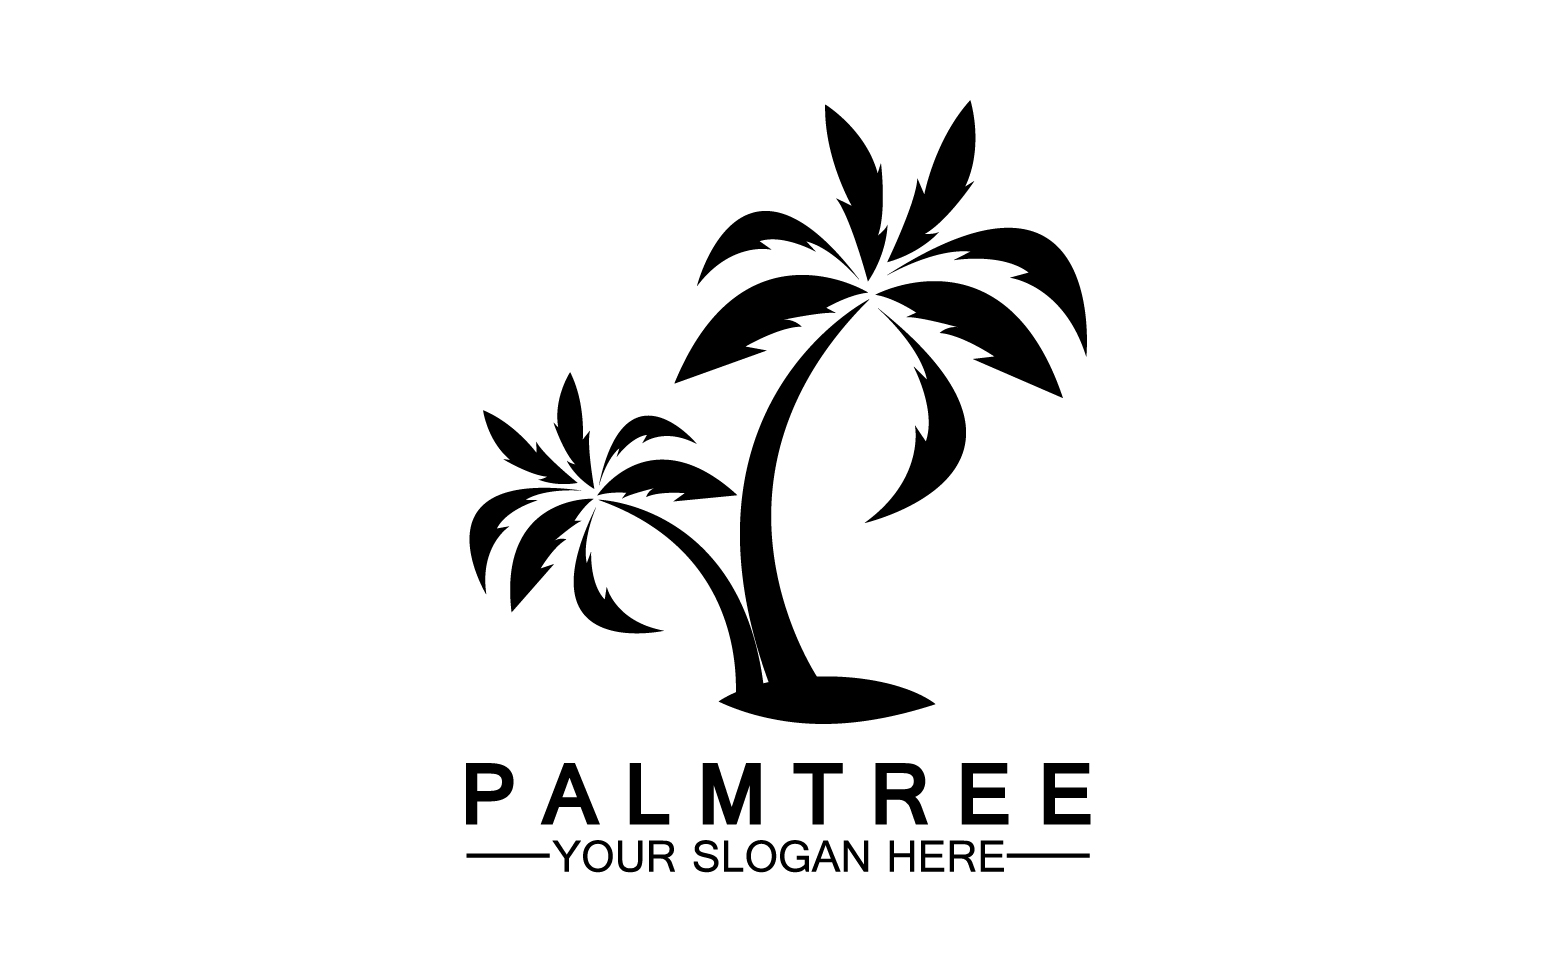 Palm tree hipster vintage logo vector icon illustration v1